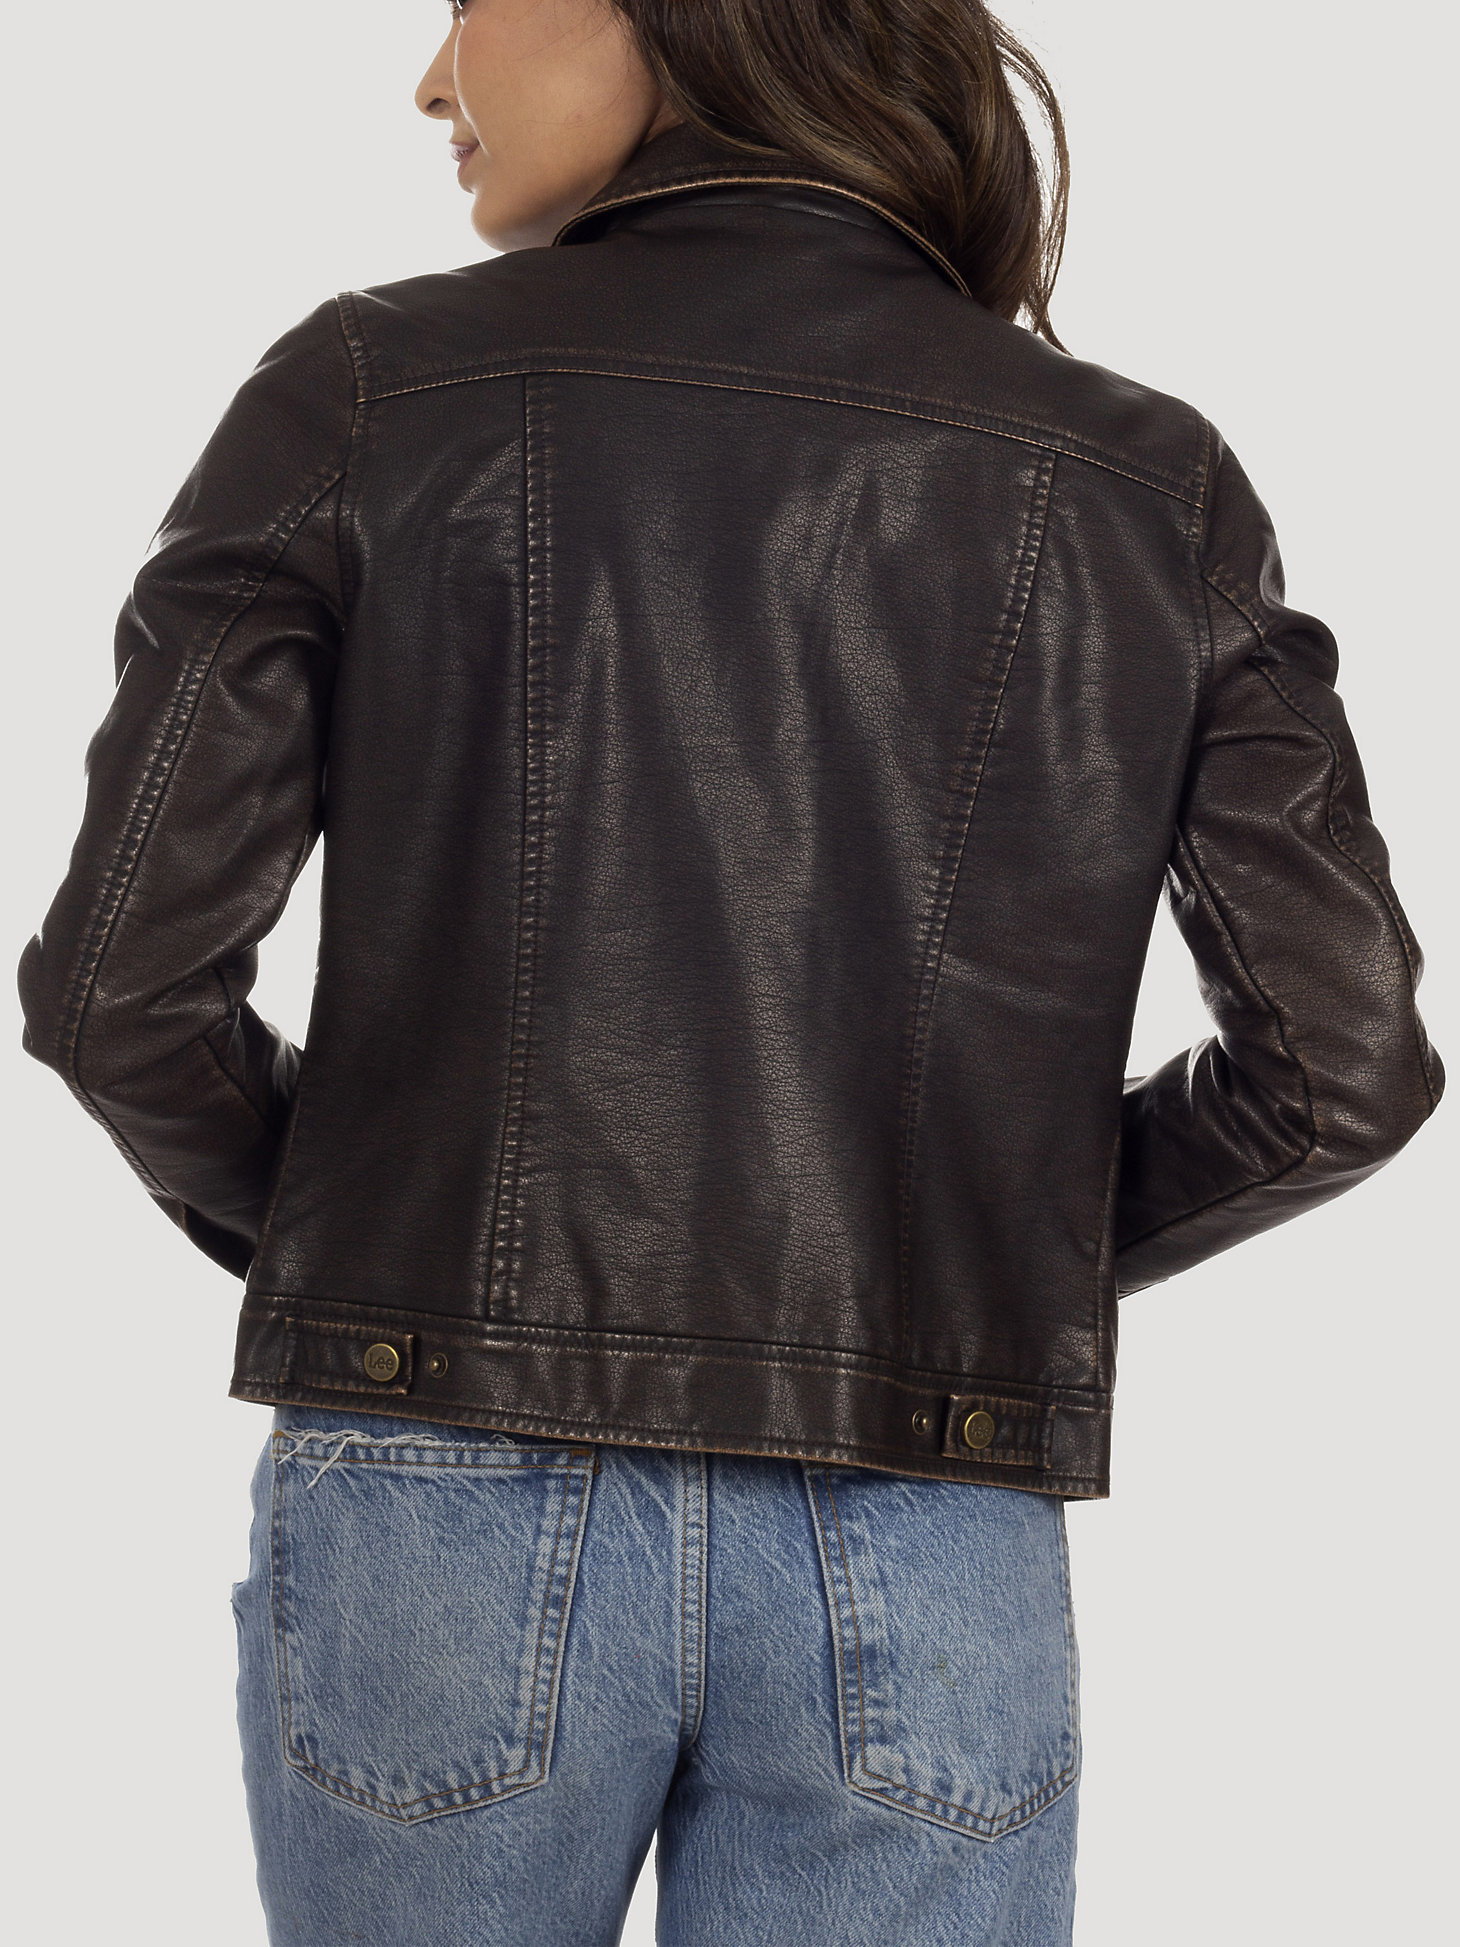 Women's Classic Trucker Faux Leather Jacket in Dark Brown alternative view 1